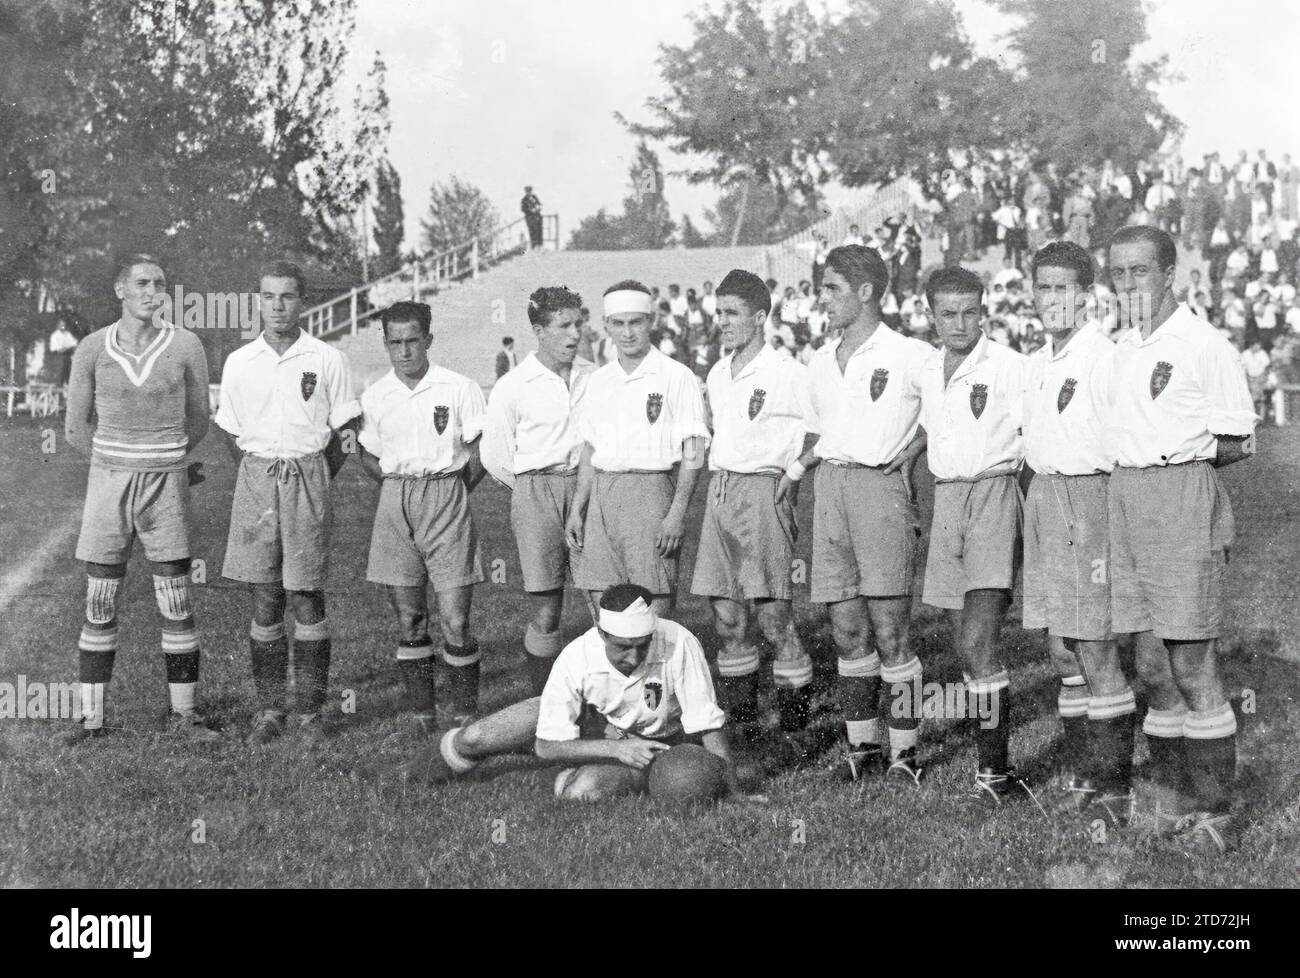 Real Saragossa Team in der Saison 1933-34. Quelle: Album / Archivo ABC / Palacio Stockfoto